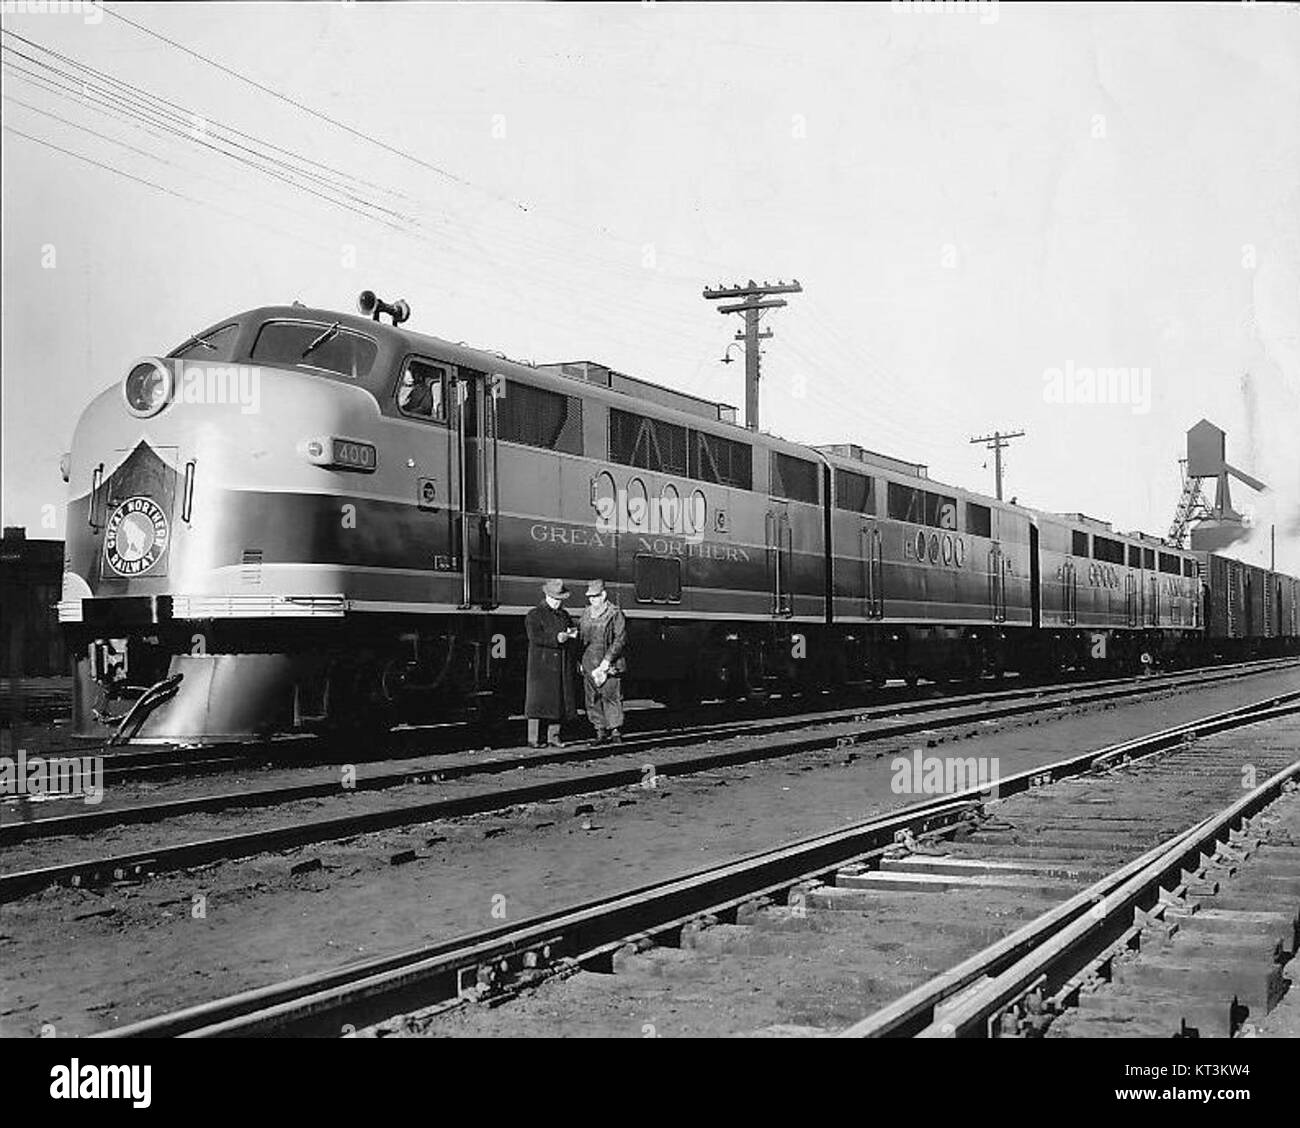 Great Northern EMD FT locomotive 1943 Stock Photo - Alamy